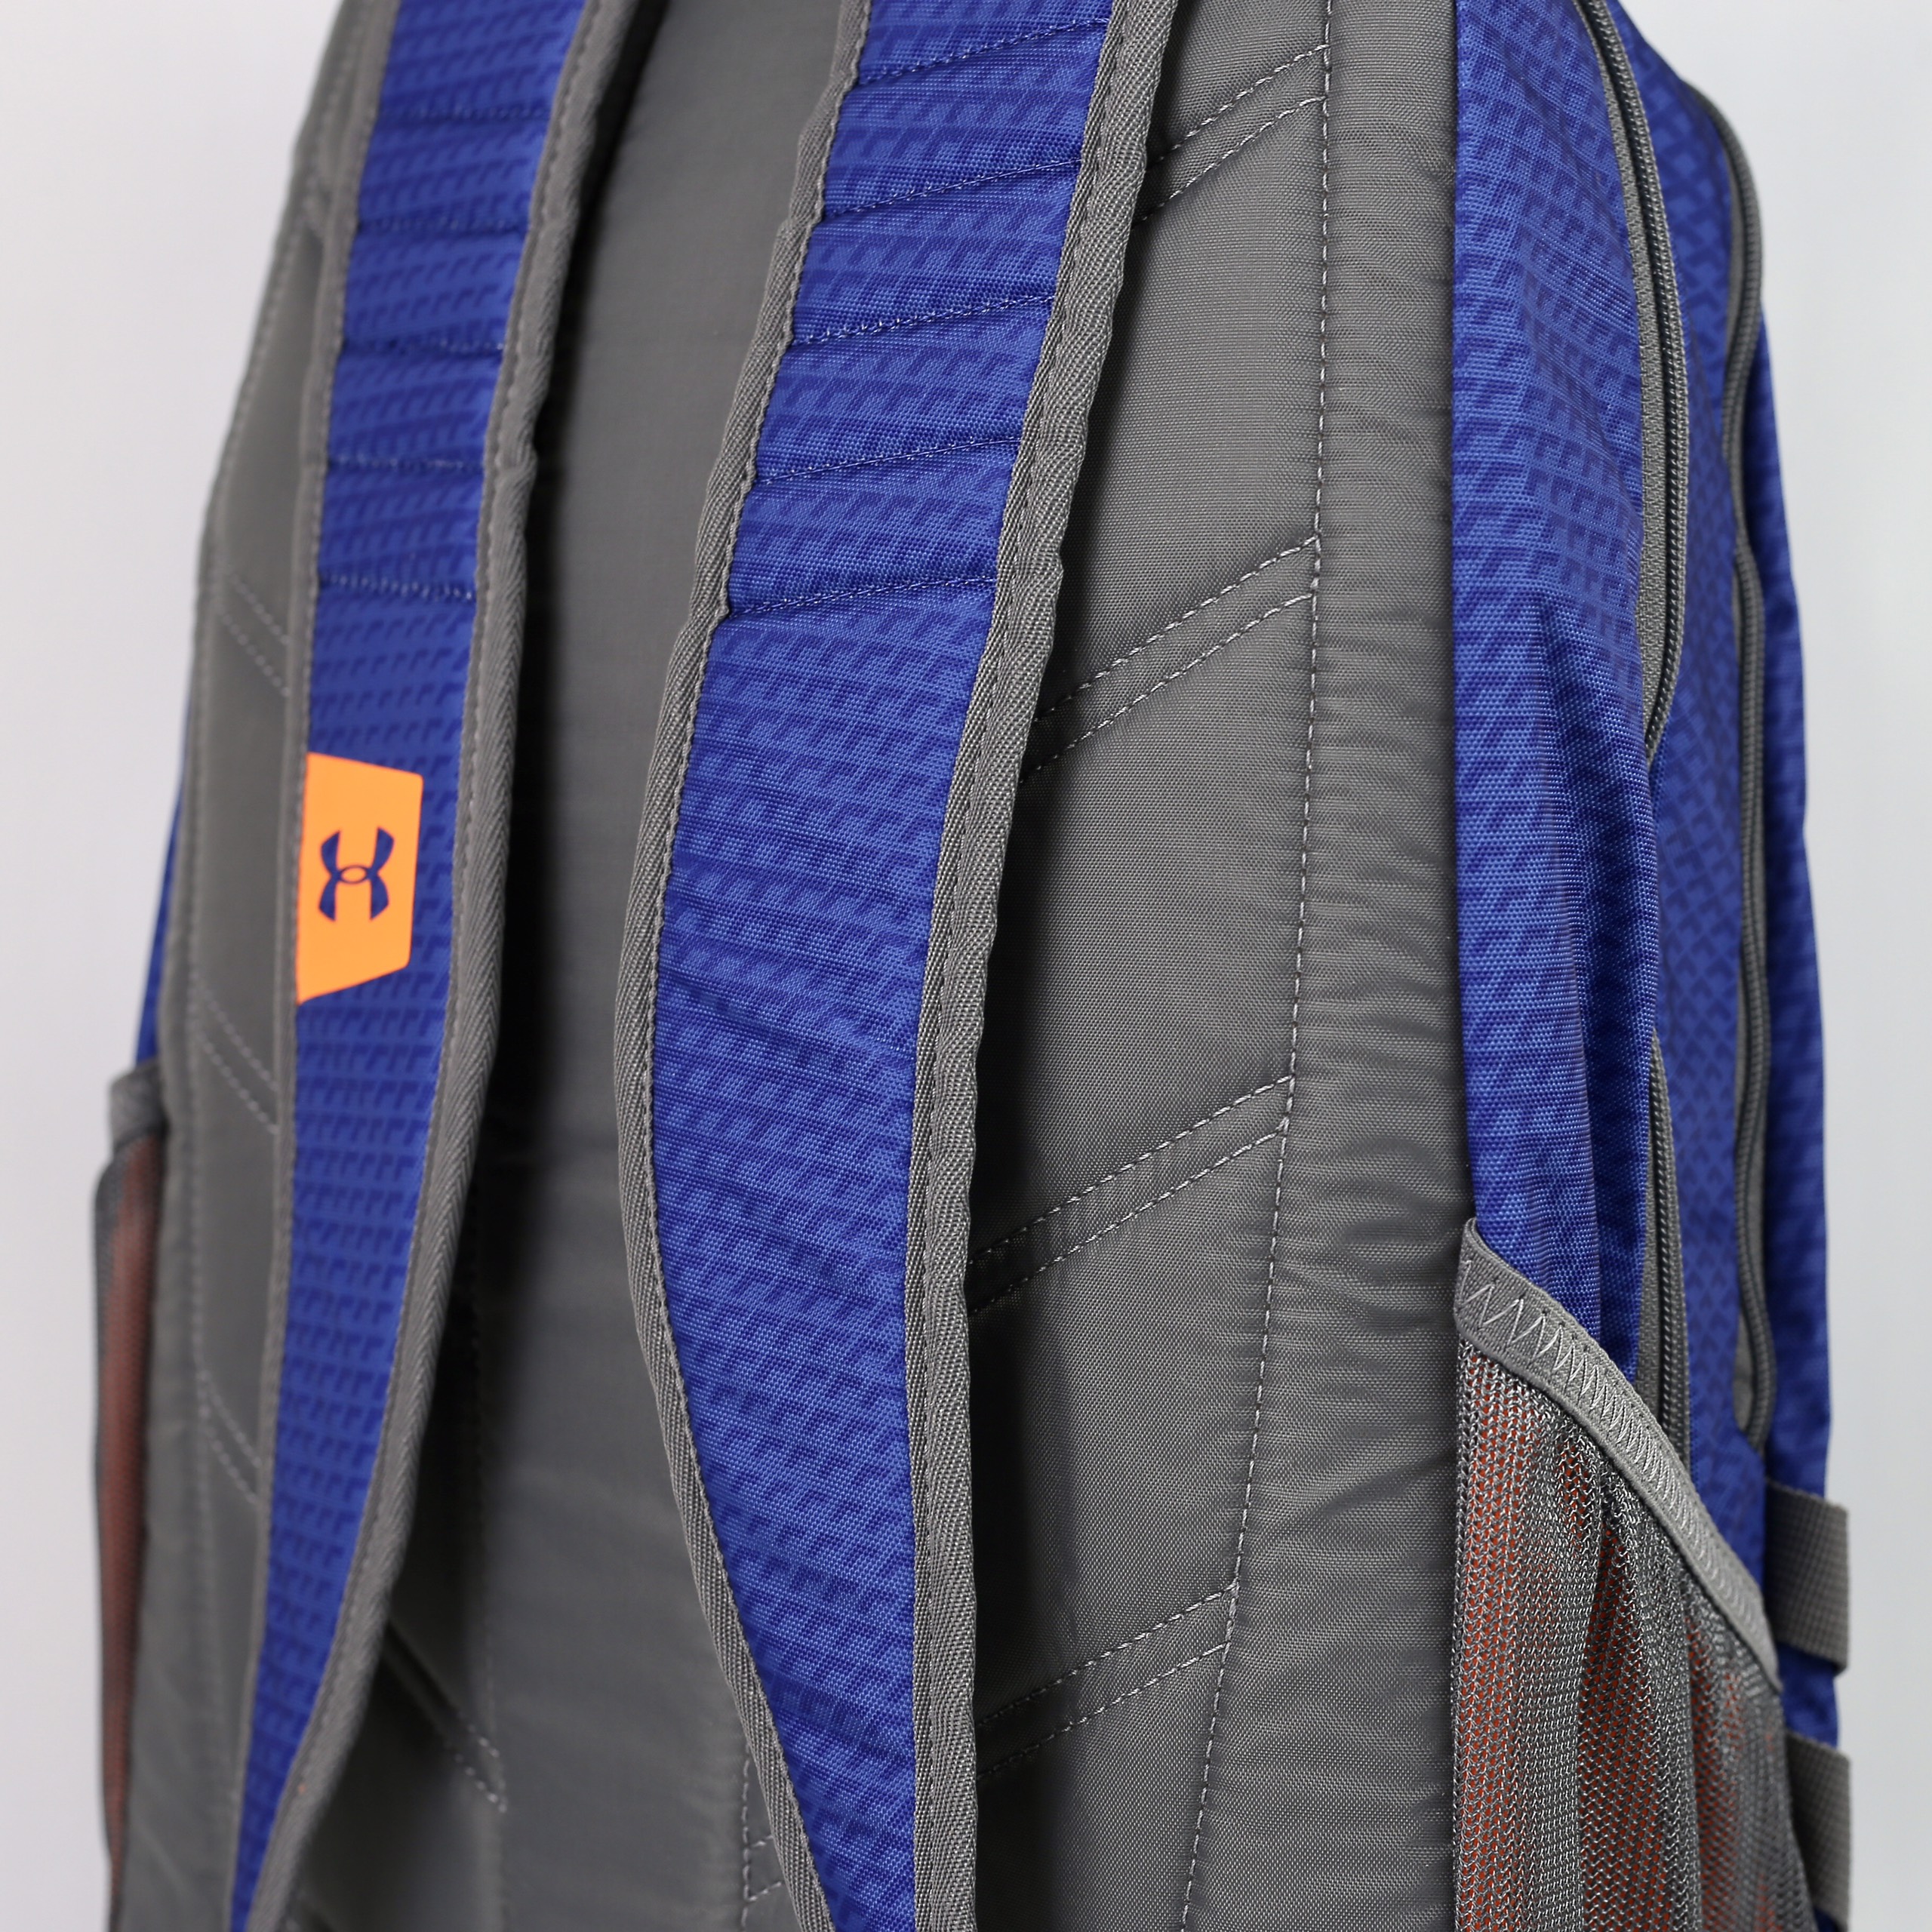 Storm Hustle II Backpack - 1263964 